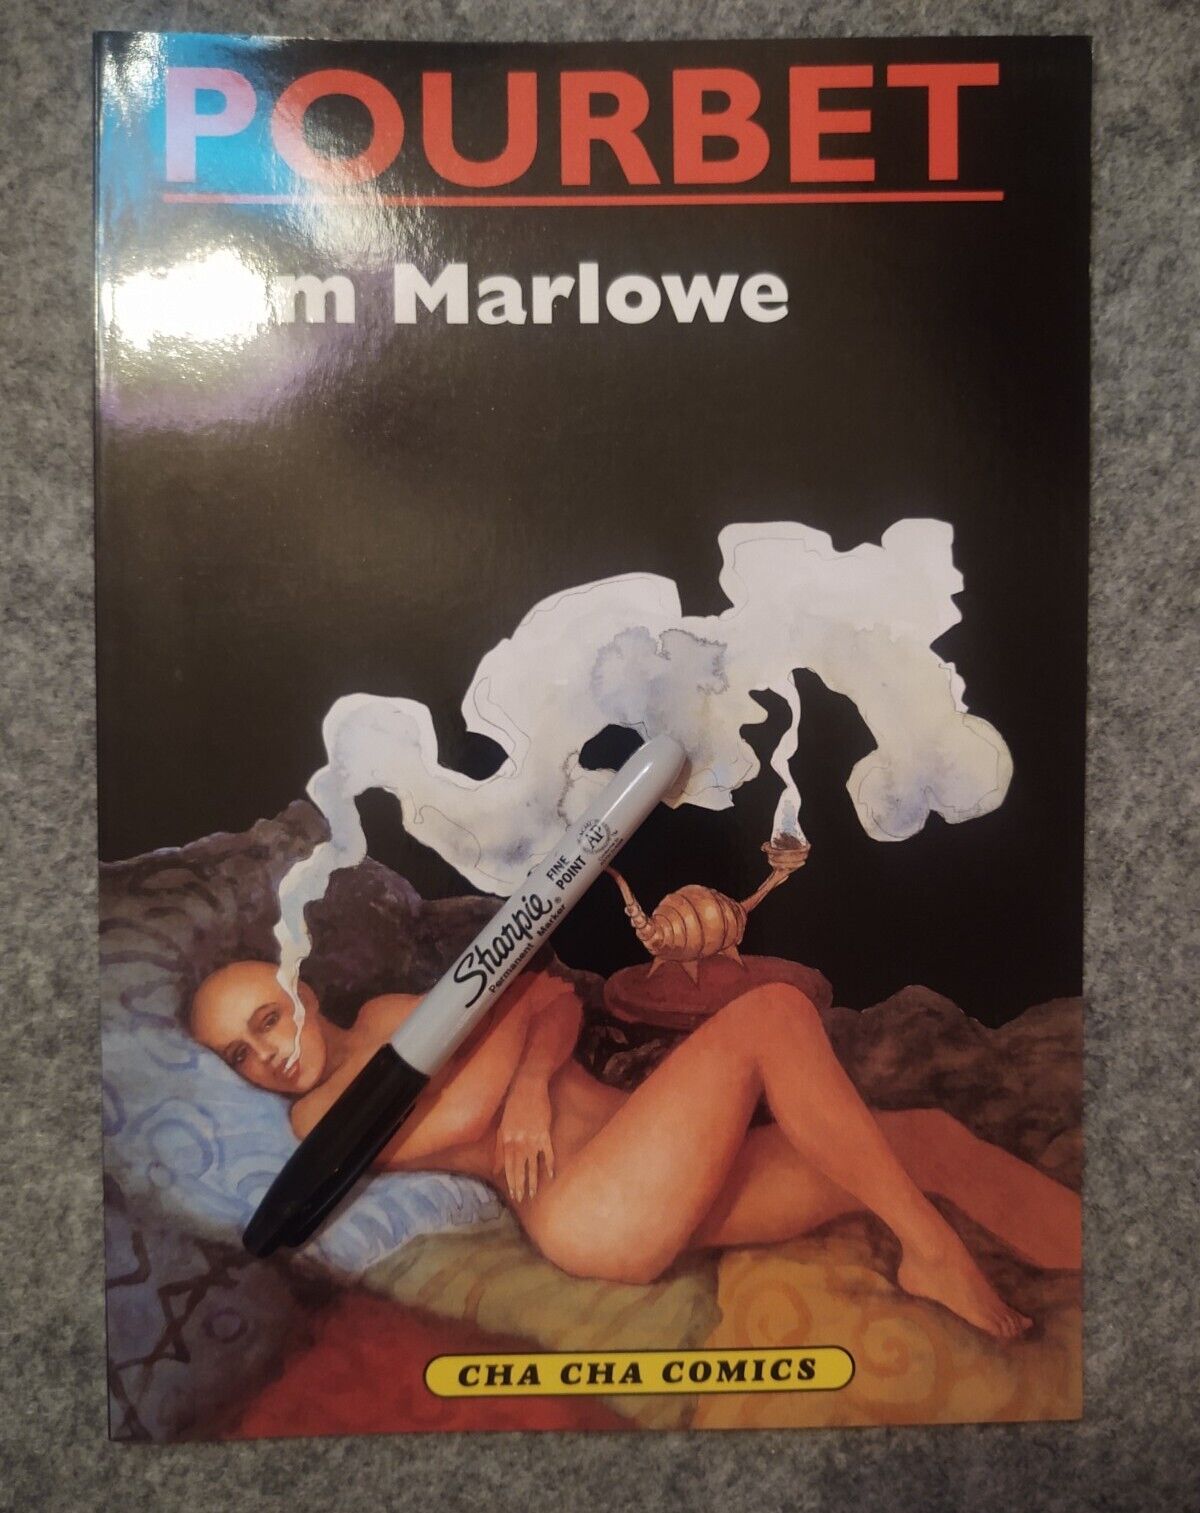 Sam Marlowe Pourbet Cha Cha Comics noir sorceress detective ritchie leone 2001